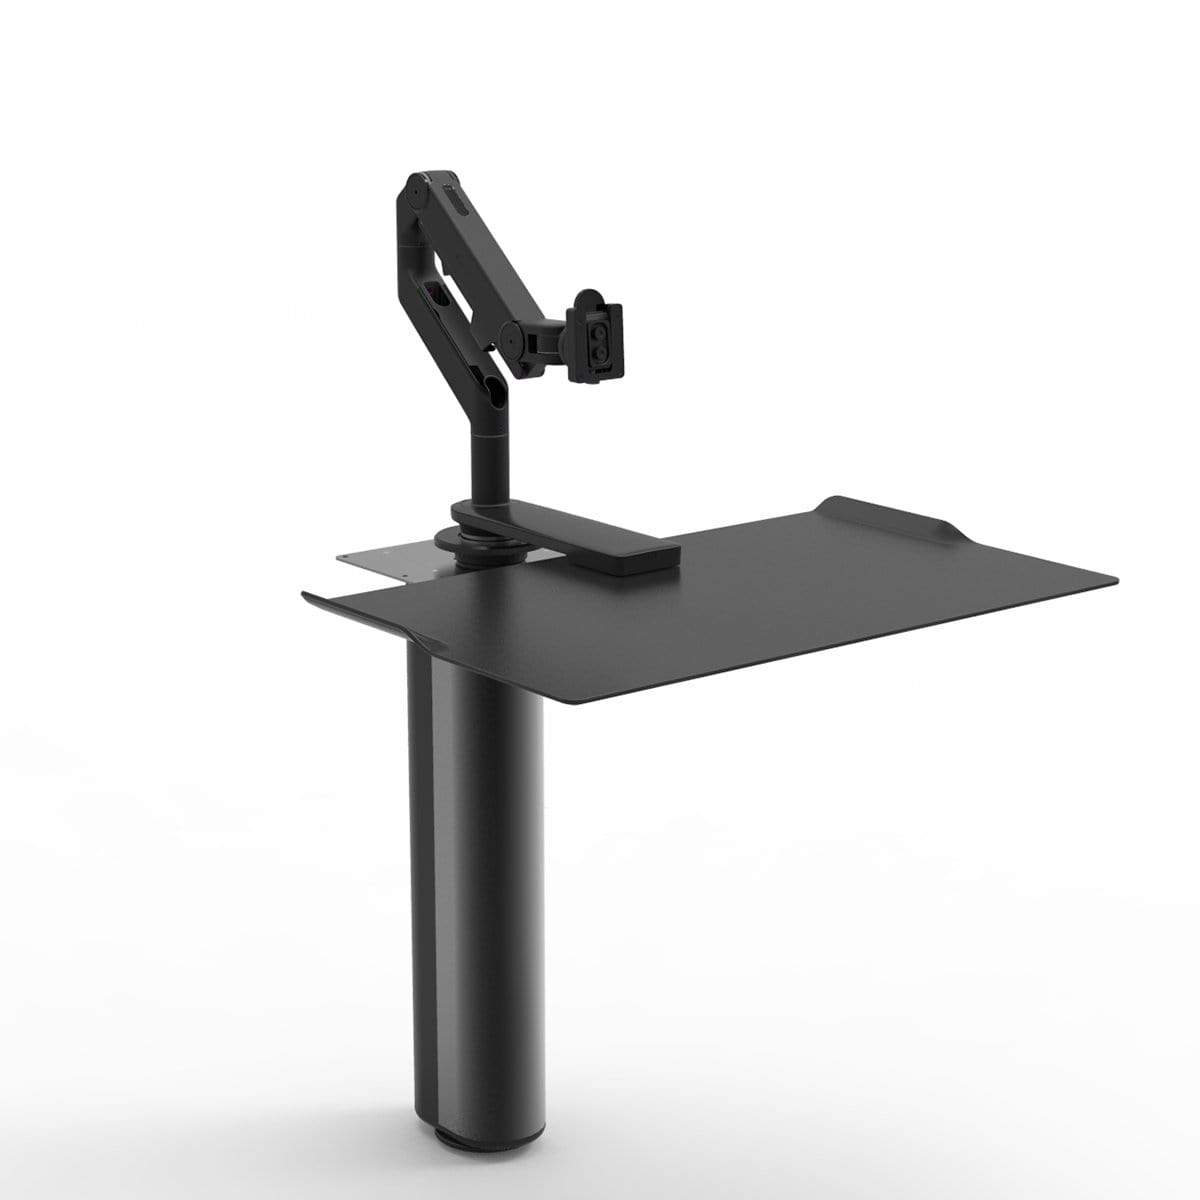 Humanscale Under Desk Black / M8 Monitor Arm Mount (Arm Sold Separately) Humanscale QUICKSTAND UNDER DESK